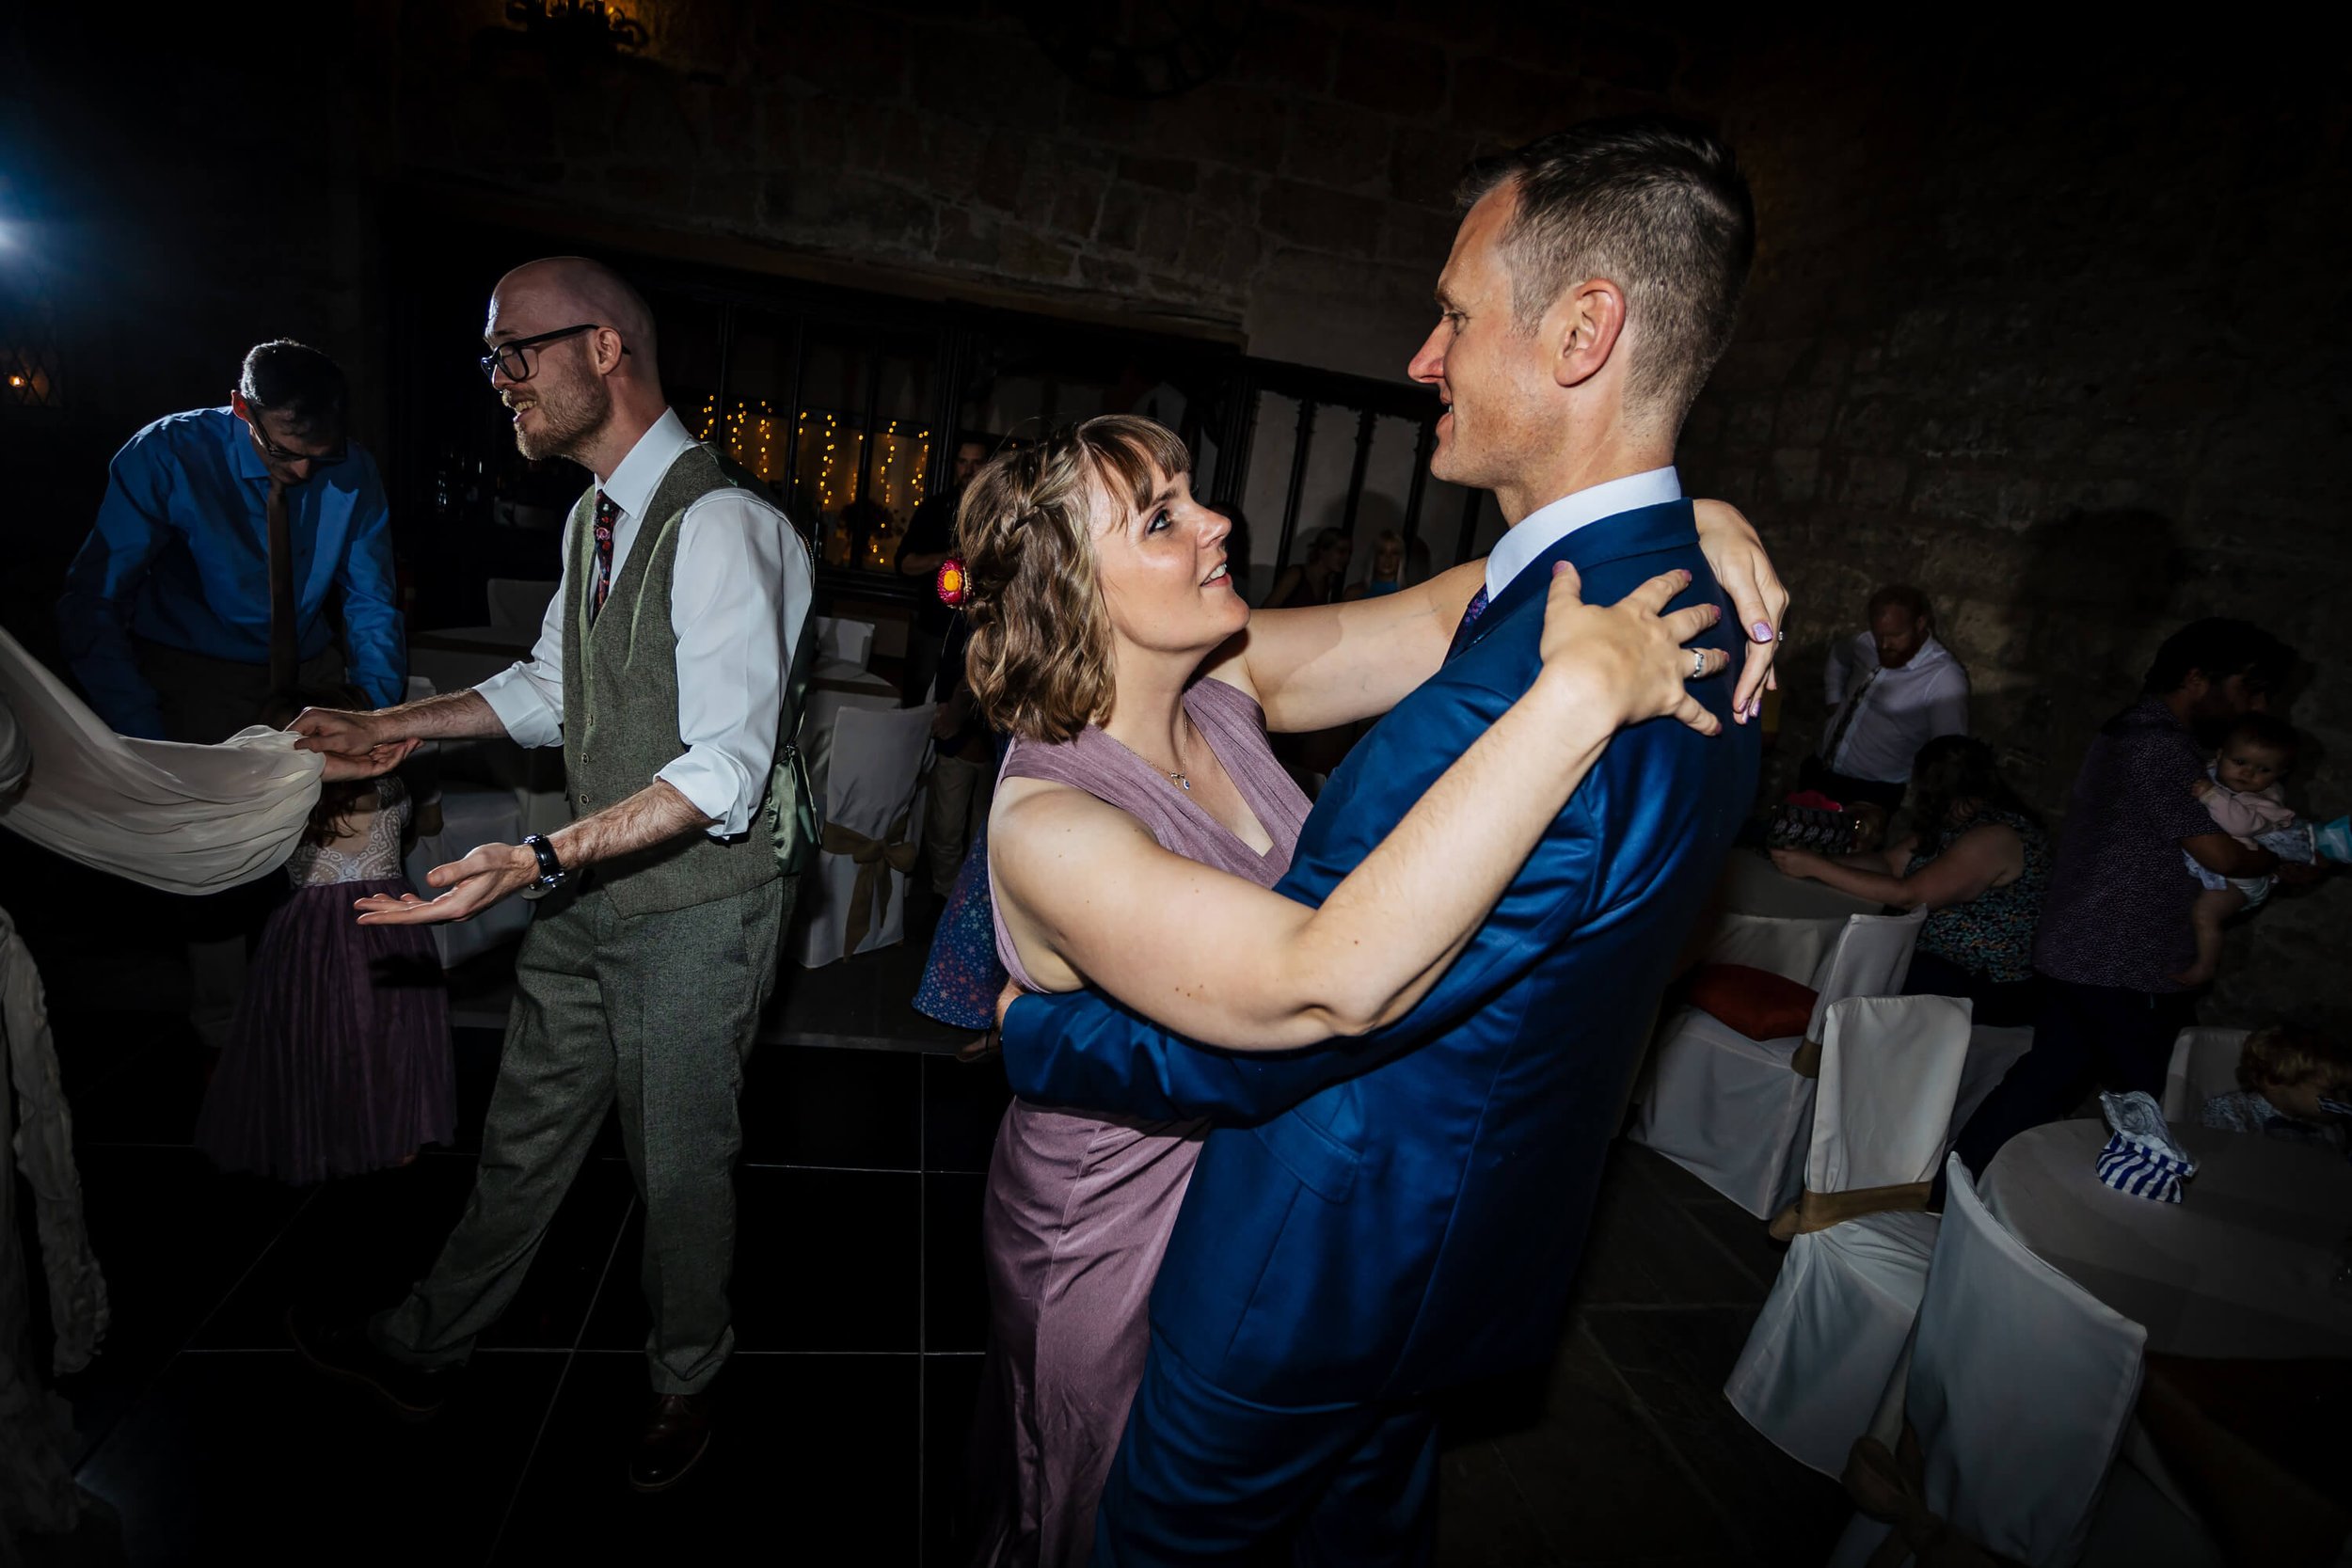 Wedding guests on the dance floor in Yorkshire